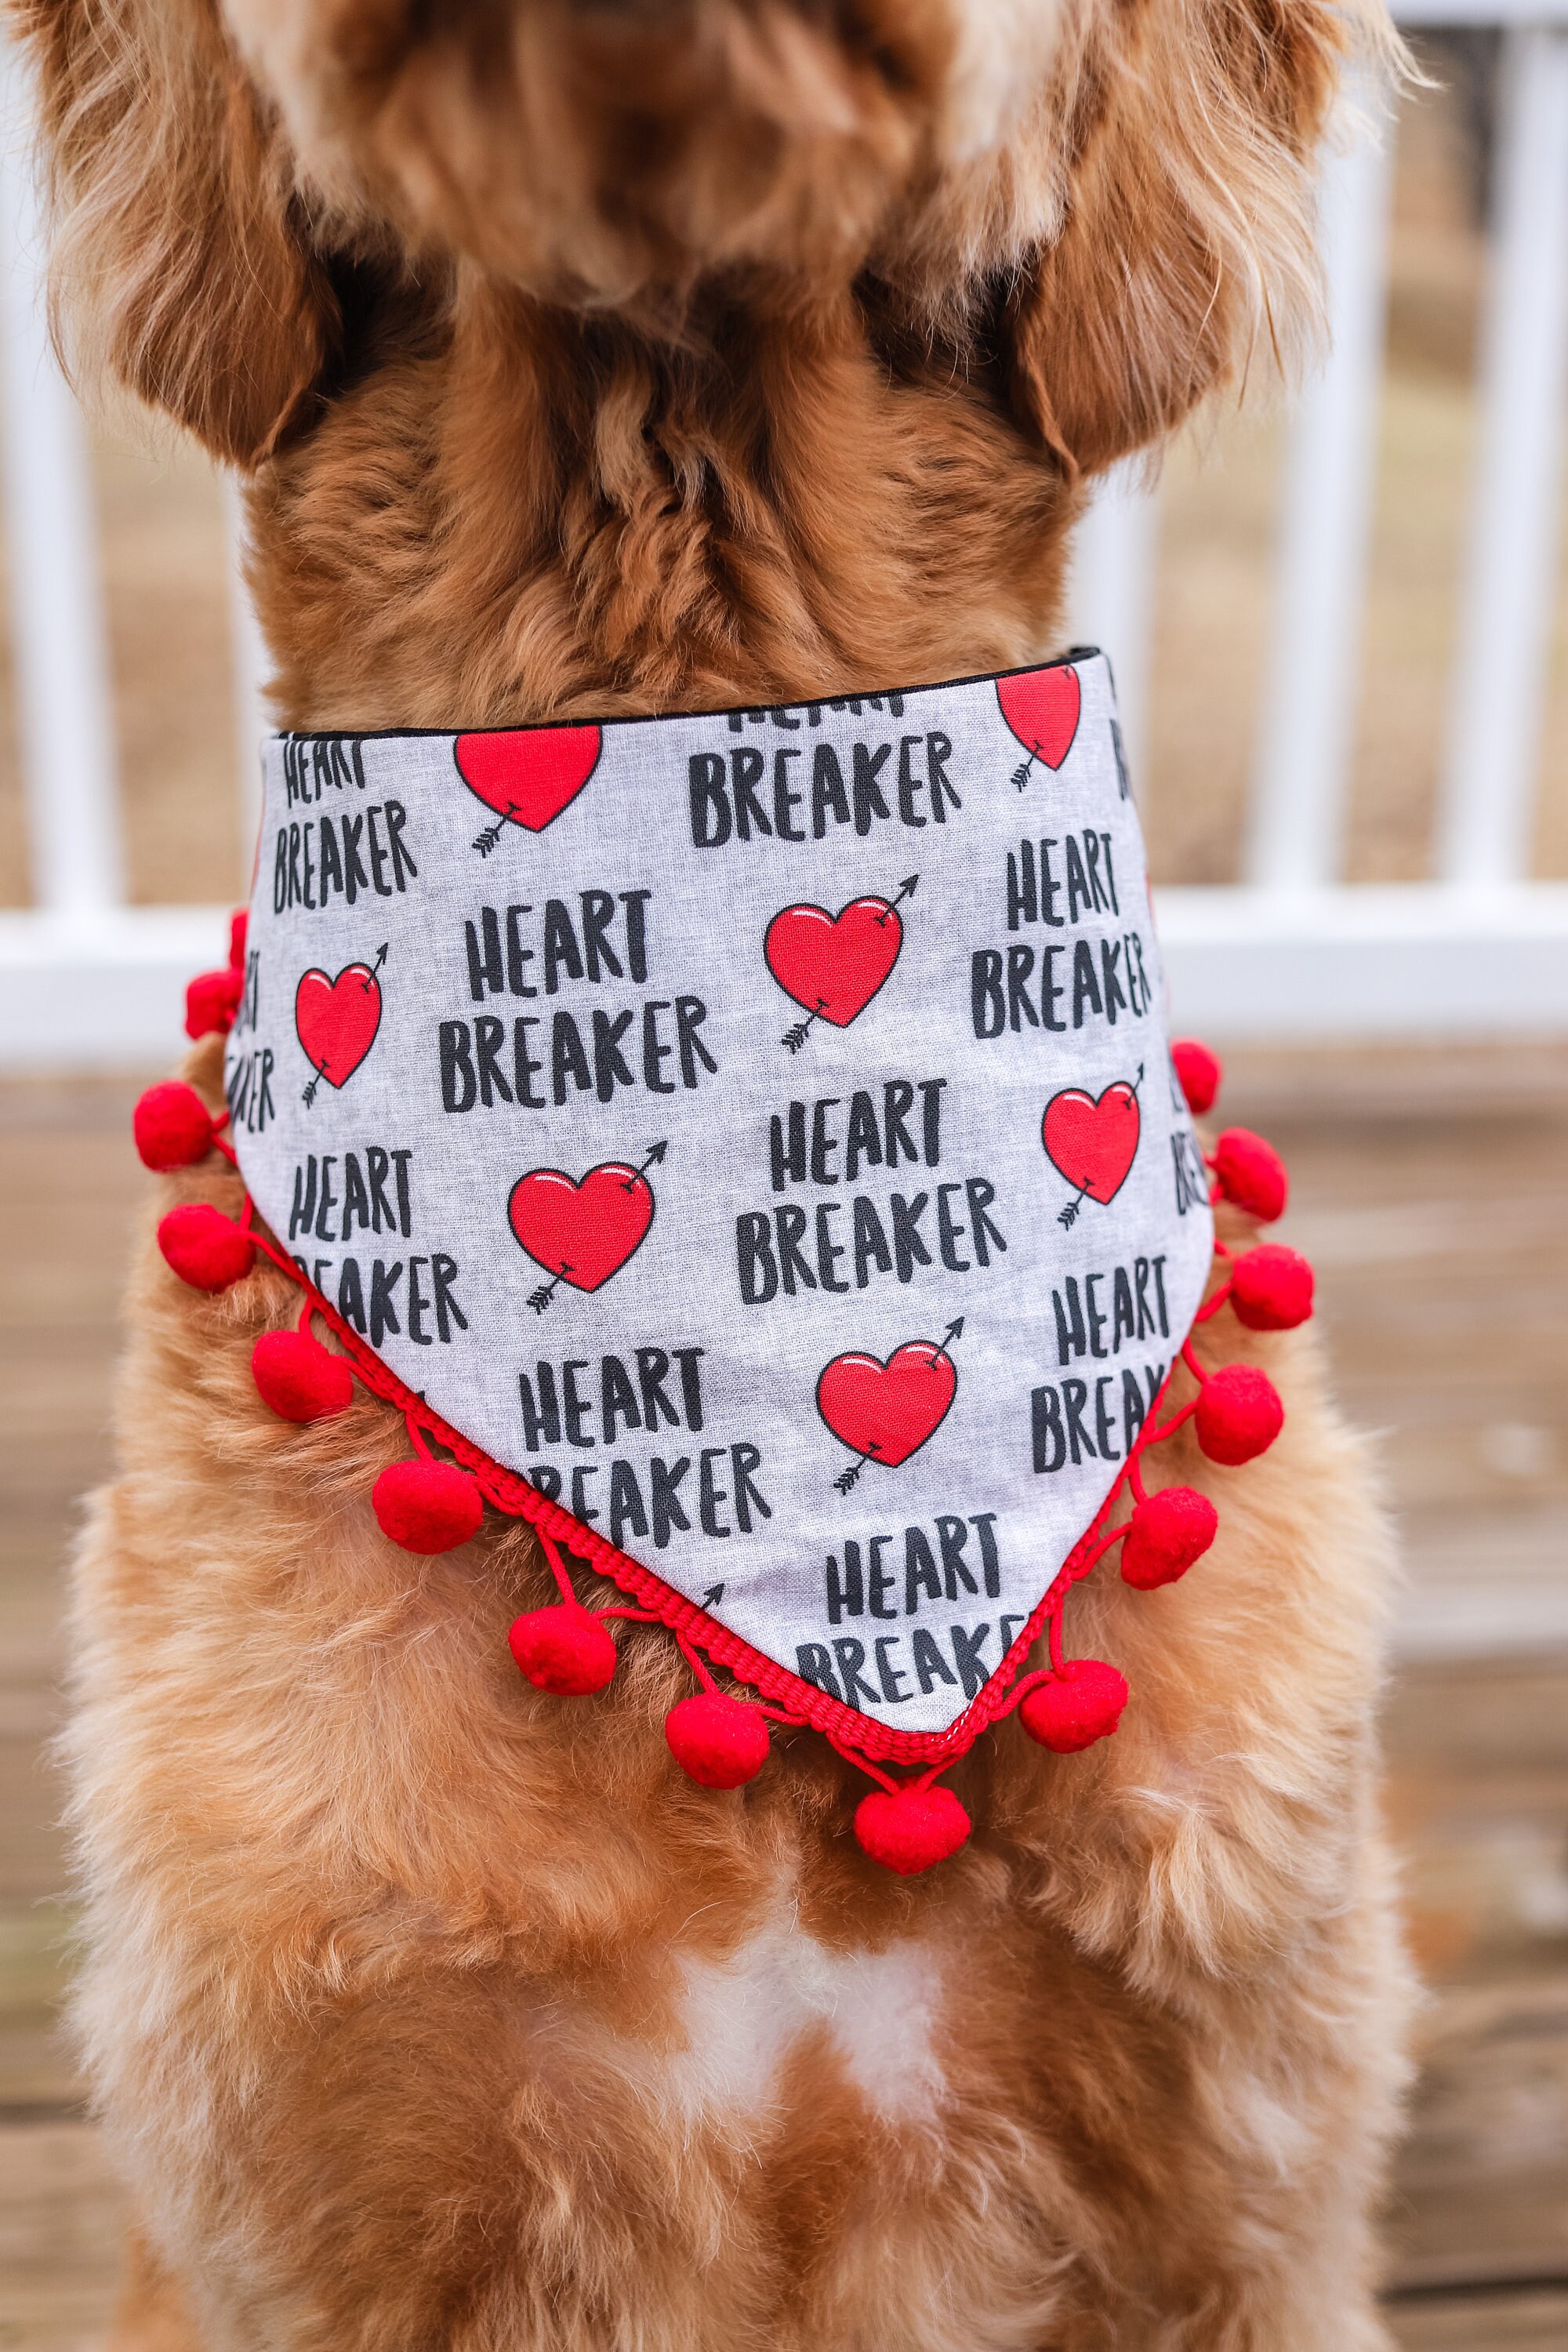 Dog Bandana, Red Heart Valentine